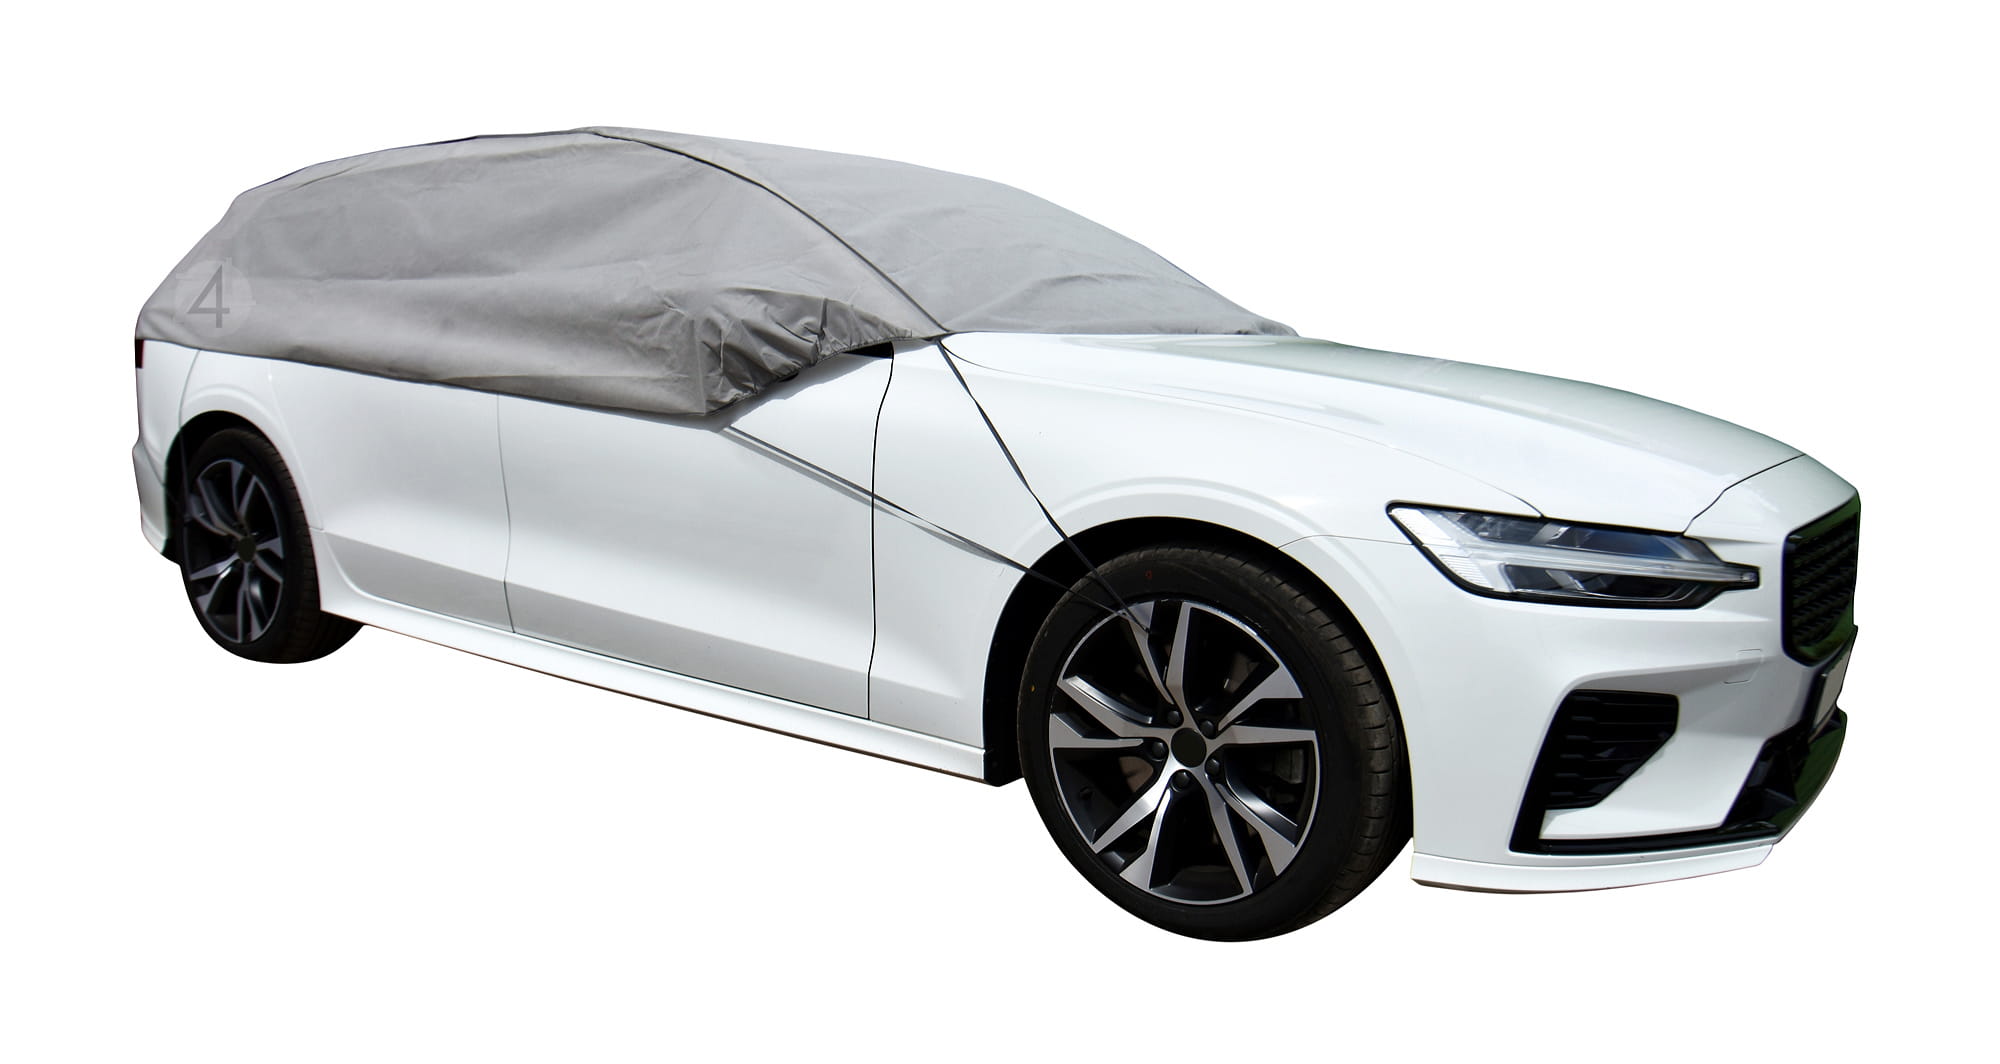 Audi A3 Sportback 8V, 8Y (Hatchback od 2012- 2020-) Półplandeka samochodowa "EASY" L-XL